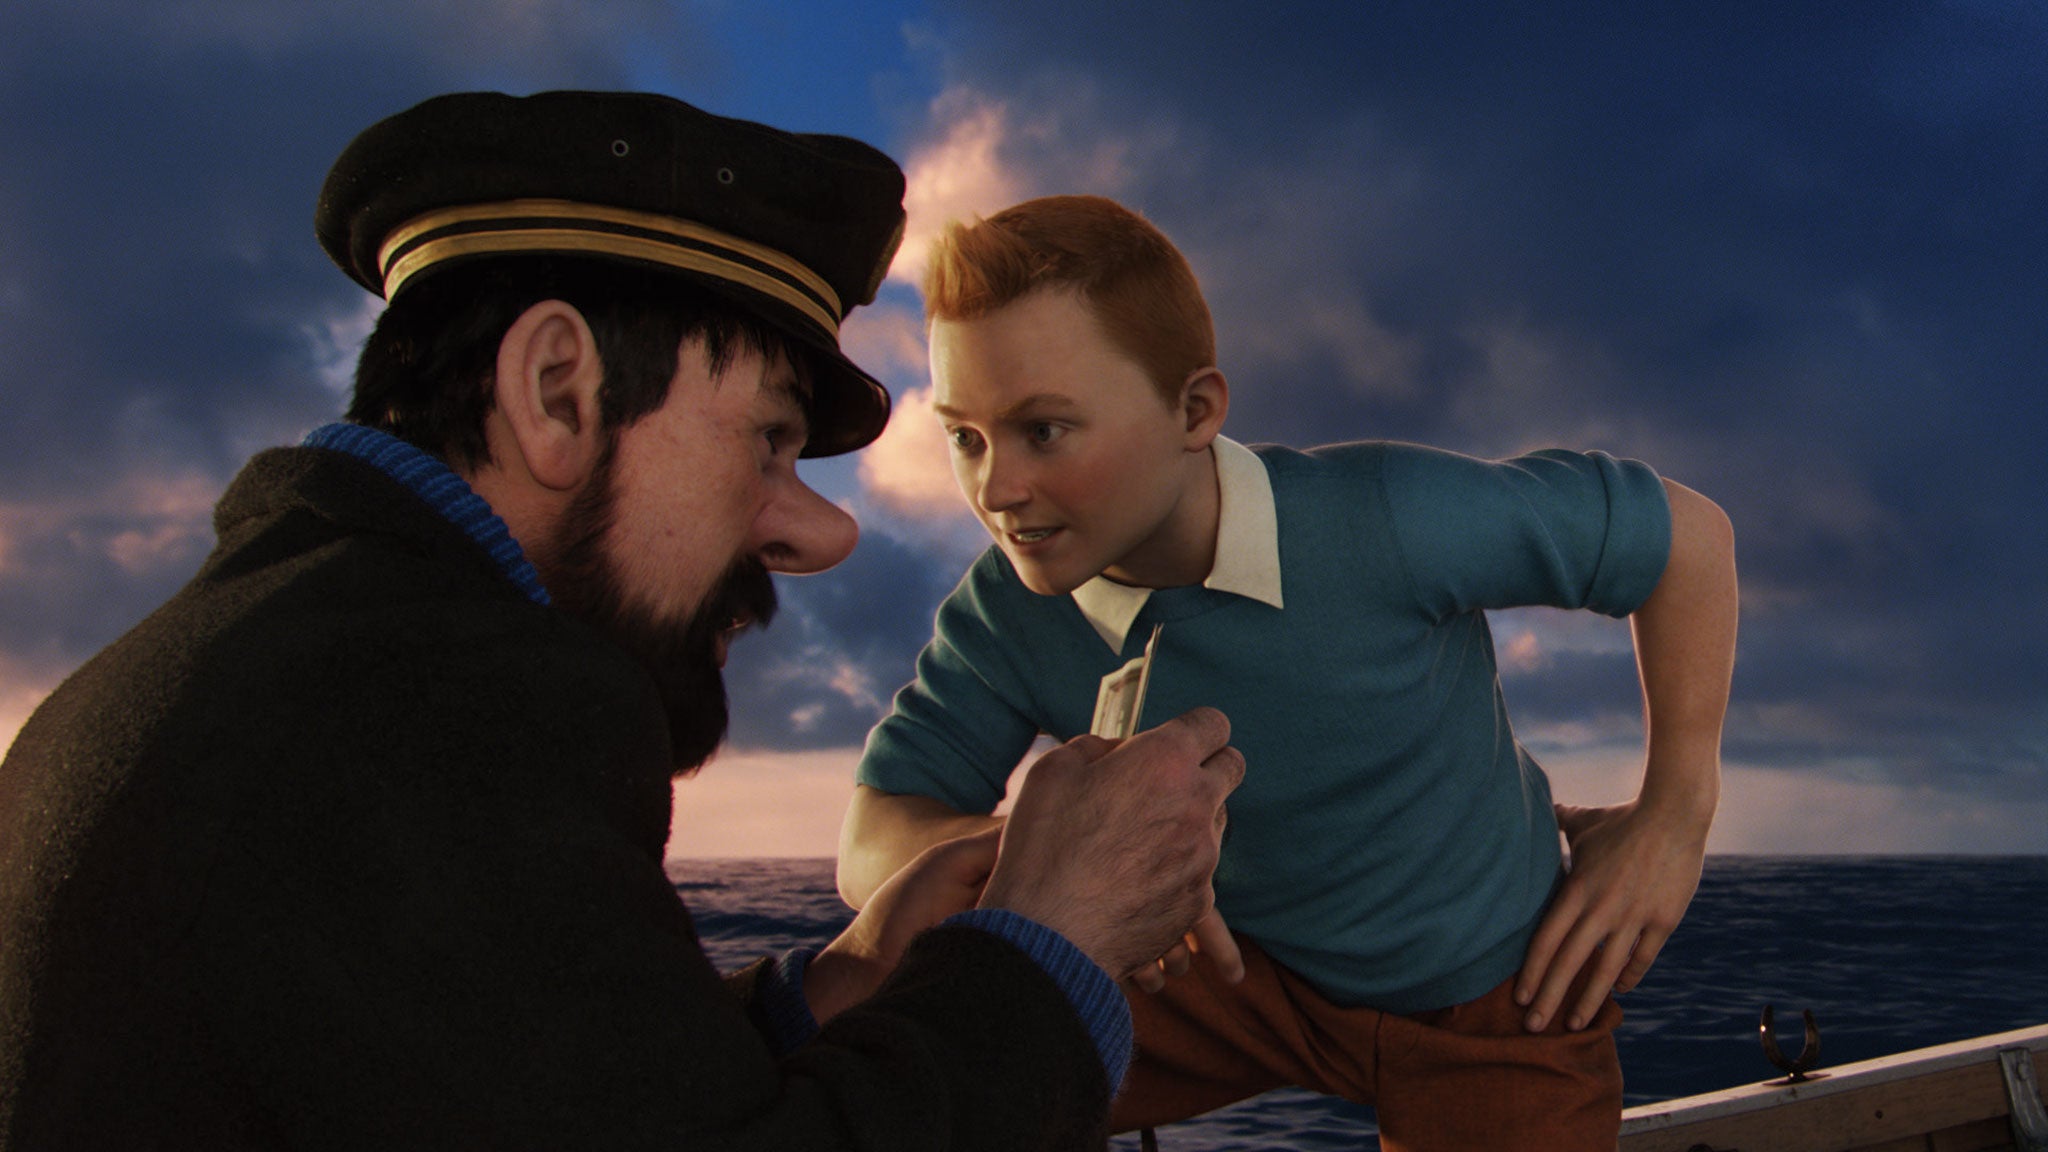 Serkis voiced Captain Haddock in Spielberg's 'The Adventures of Tintin' in 2011